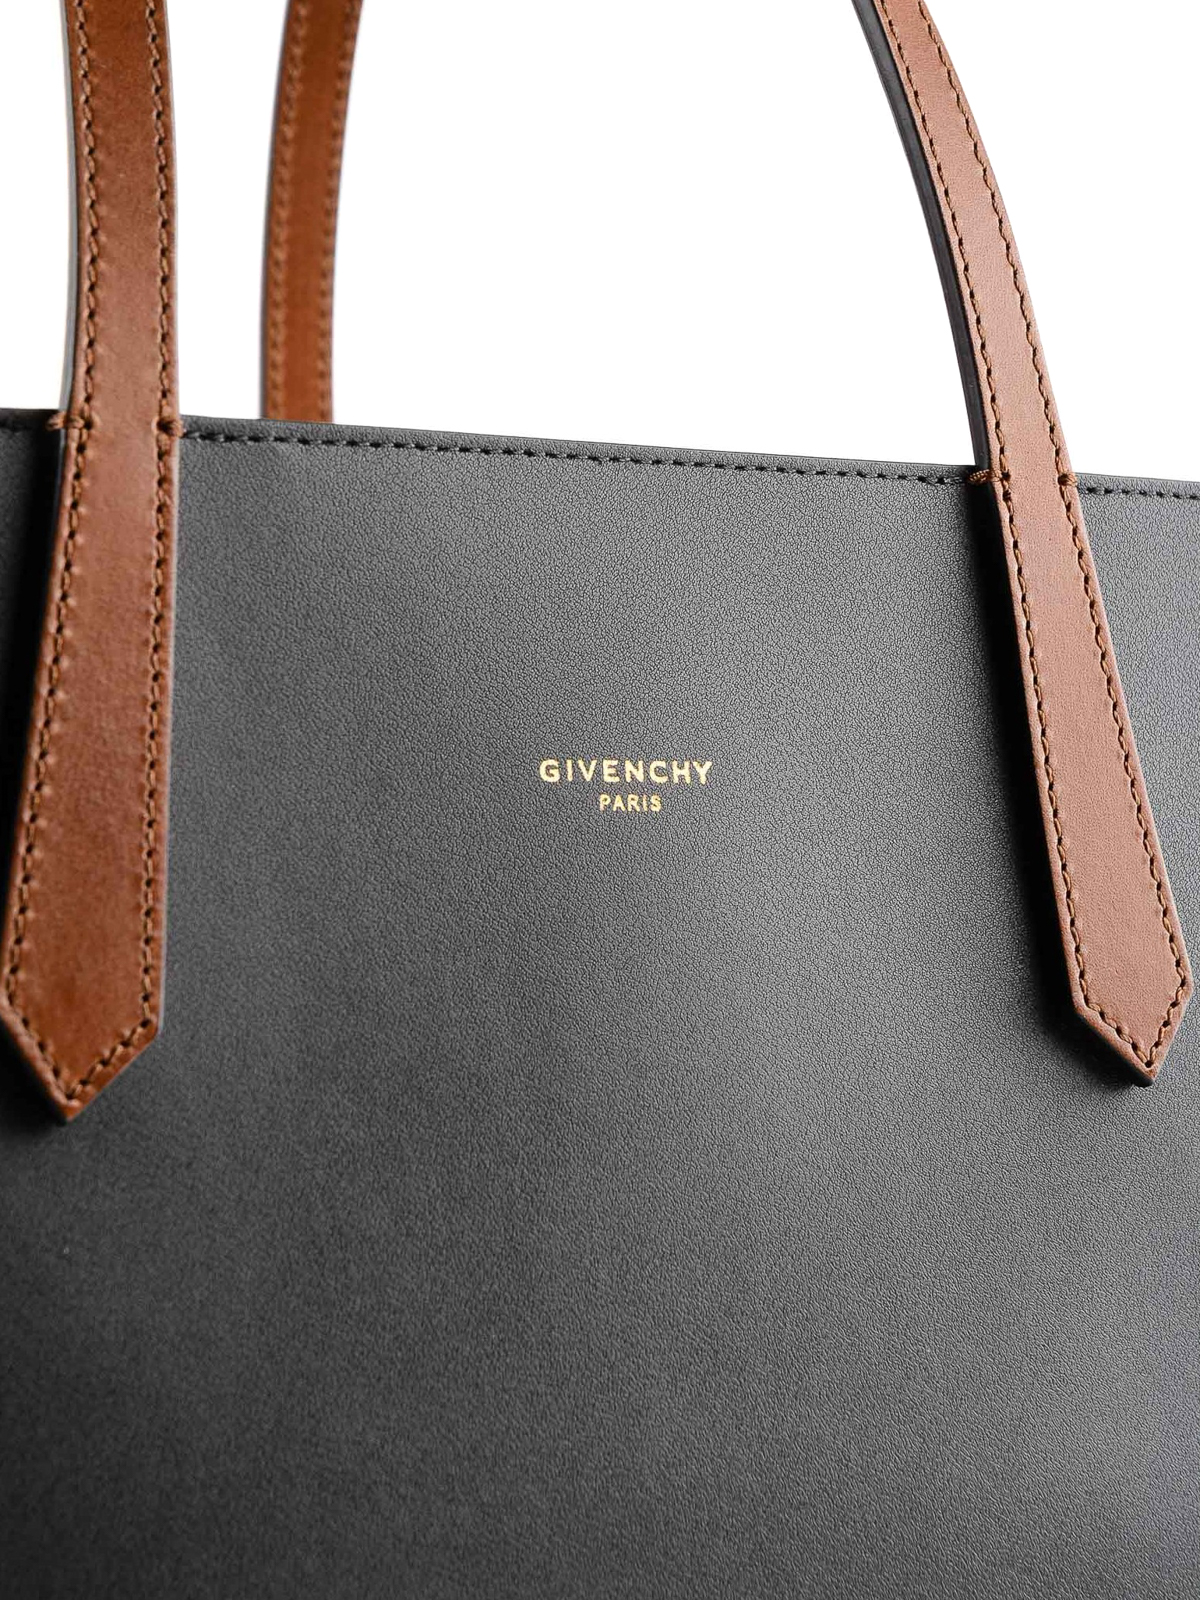 Givenchy - GV3 medium leather shopper 